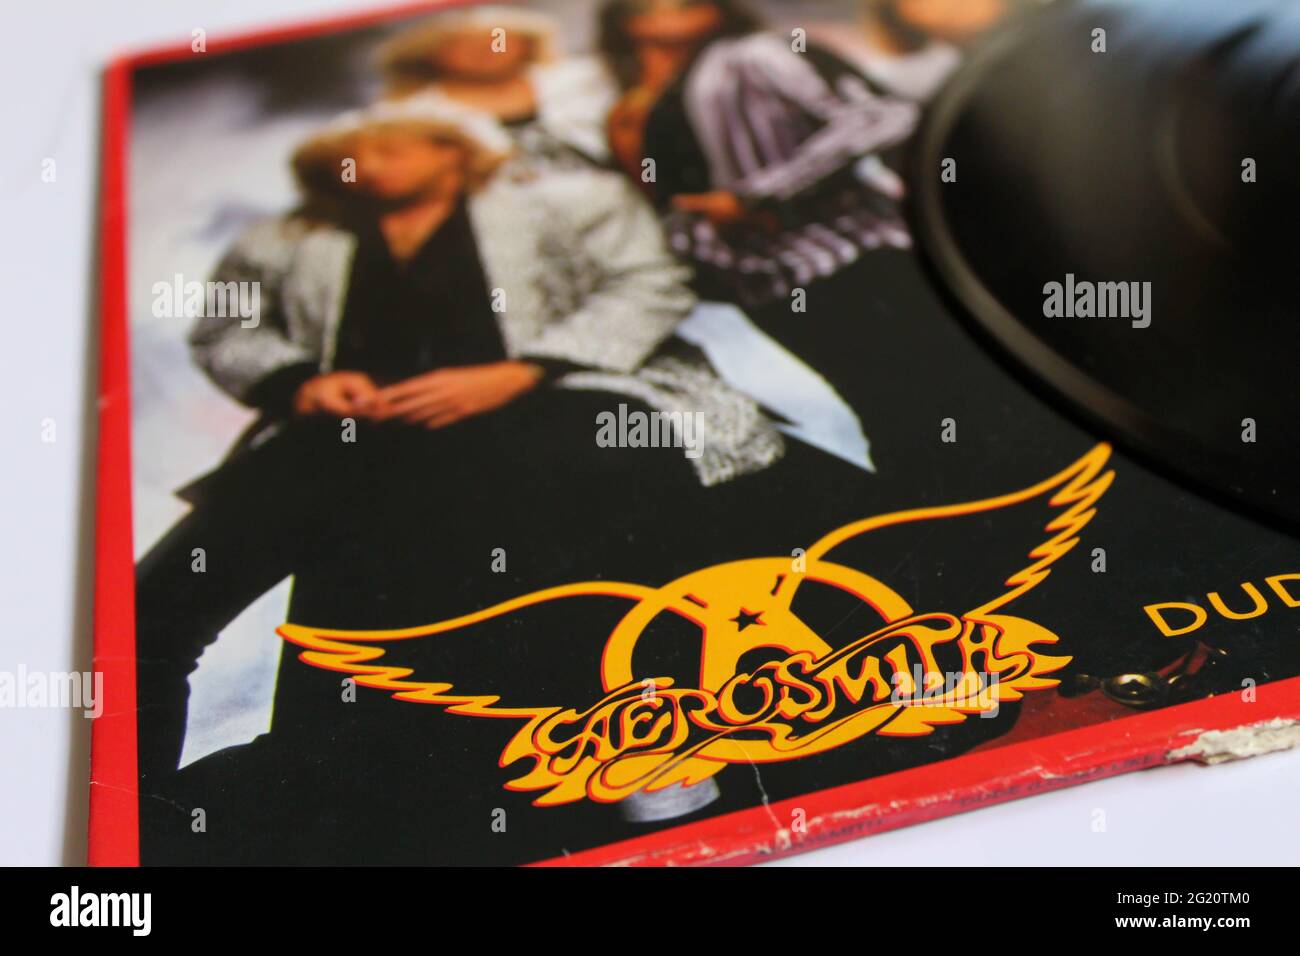 Classic rock band, Aerosmith, music album on vinyl record LP disc. Titled Dude looks like a lady single Album Cover Stock Photo